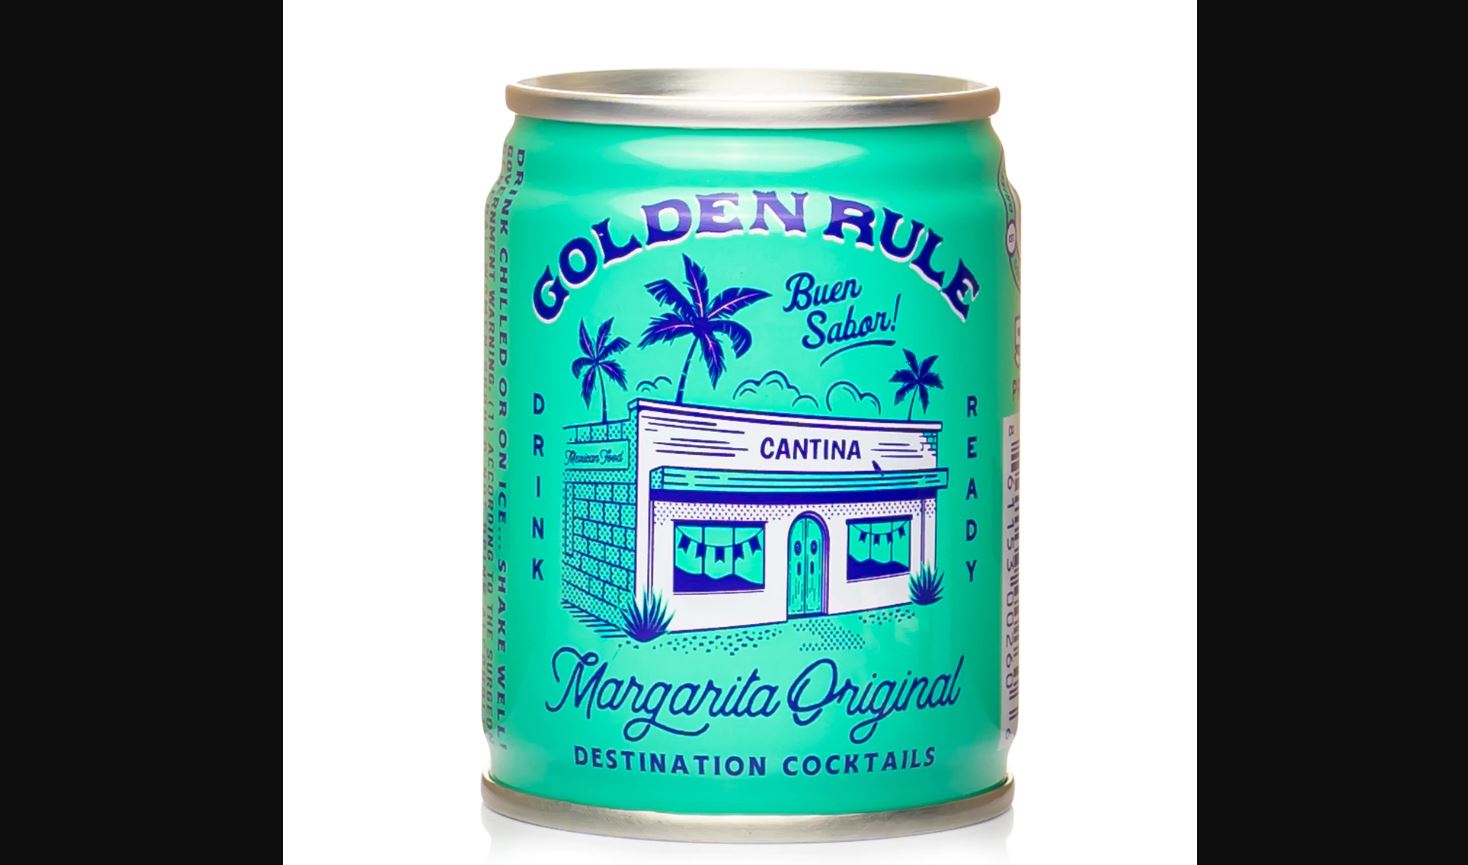 Golden Rule Margarita Original